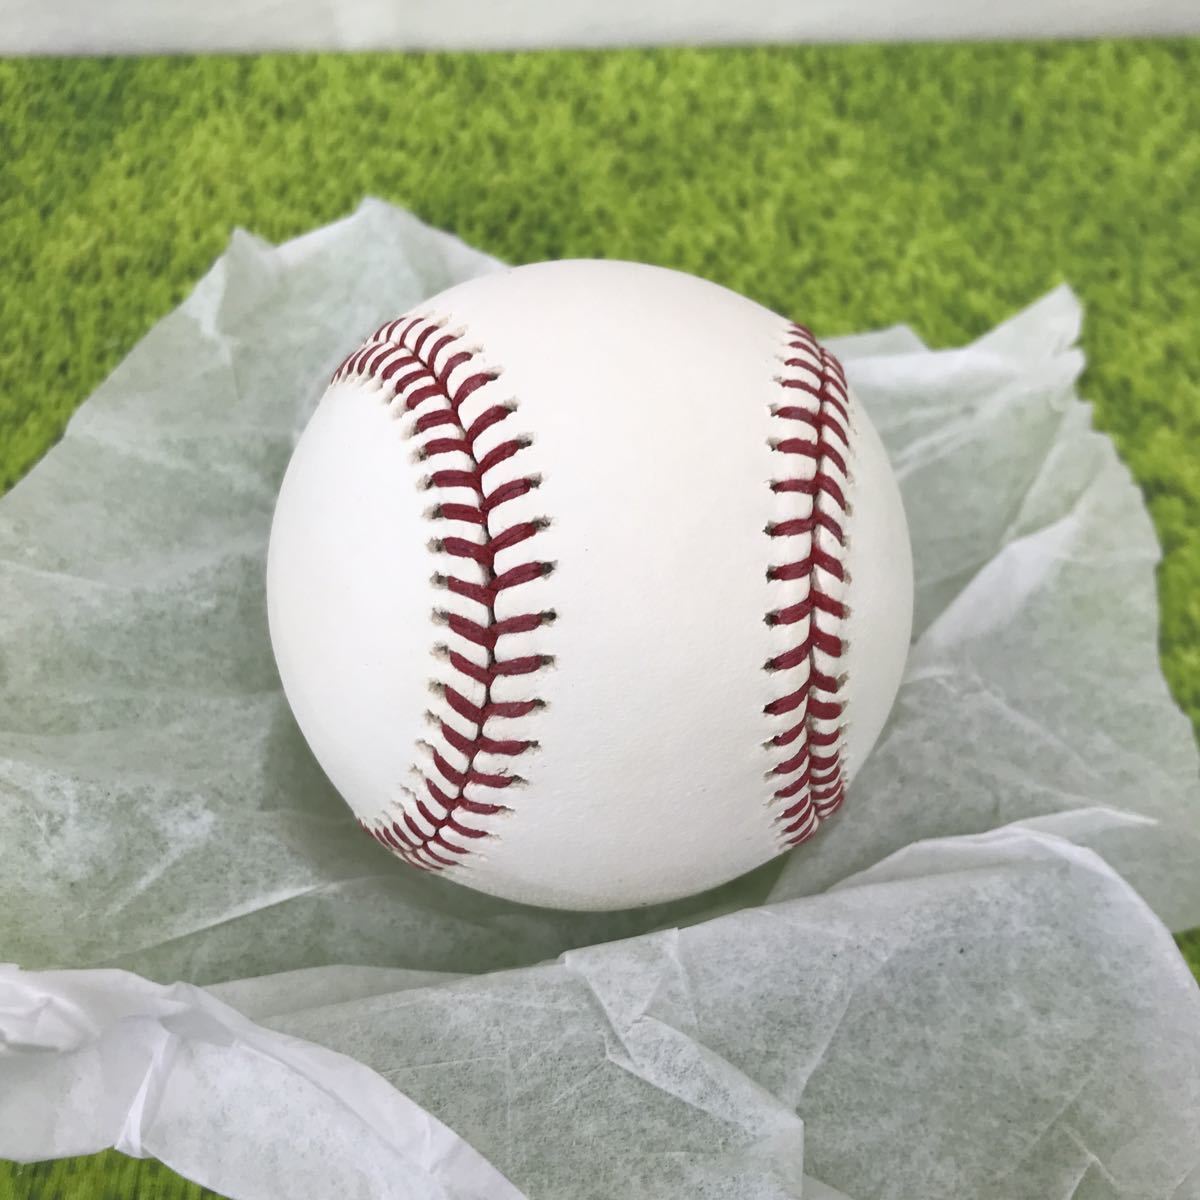 H-2187 品 MLB メジャーリーグ 公式球 試合球 硬式 ローリングス Rawlings ROMLB6 野球 ボール(硬式)｜売買されたオークション情報、yahooの商品情報をアーカイブ公開  - オークファン（aucfan.com）